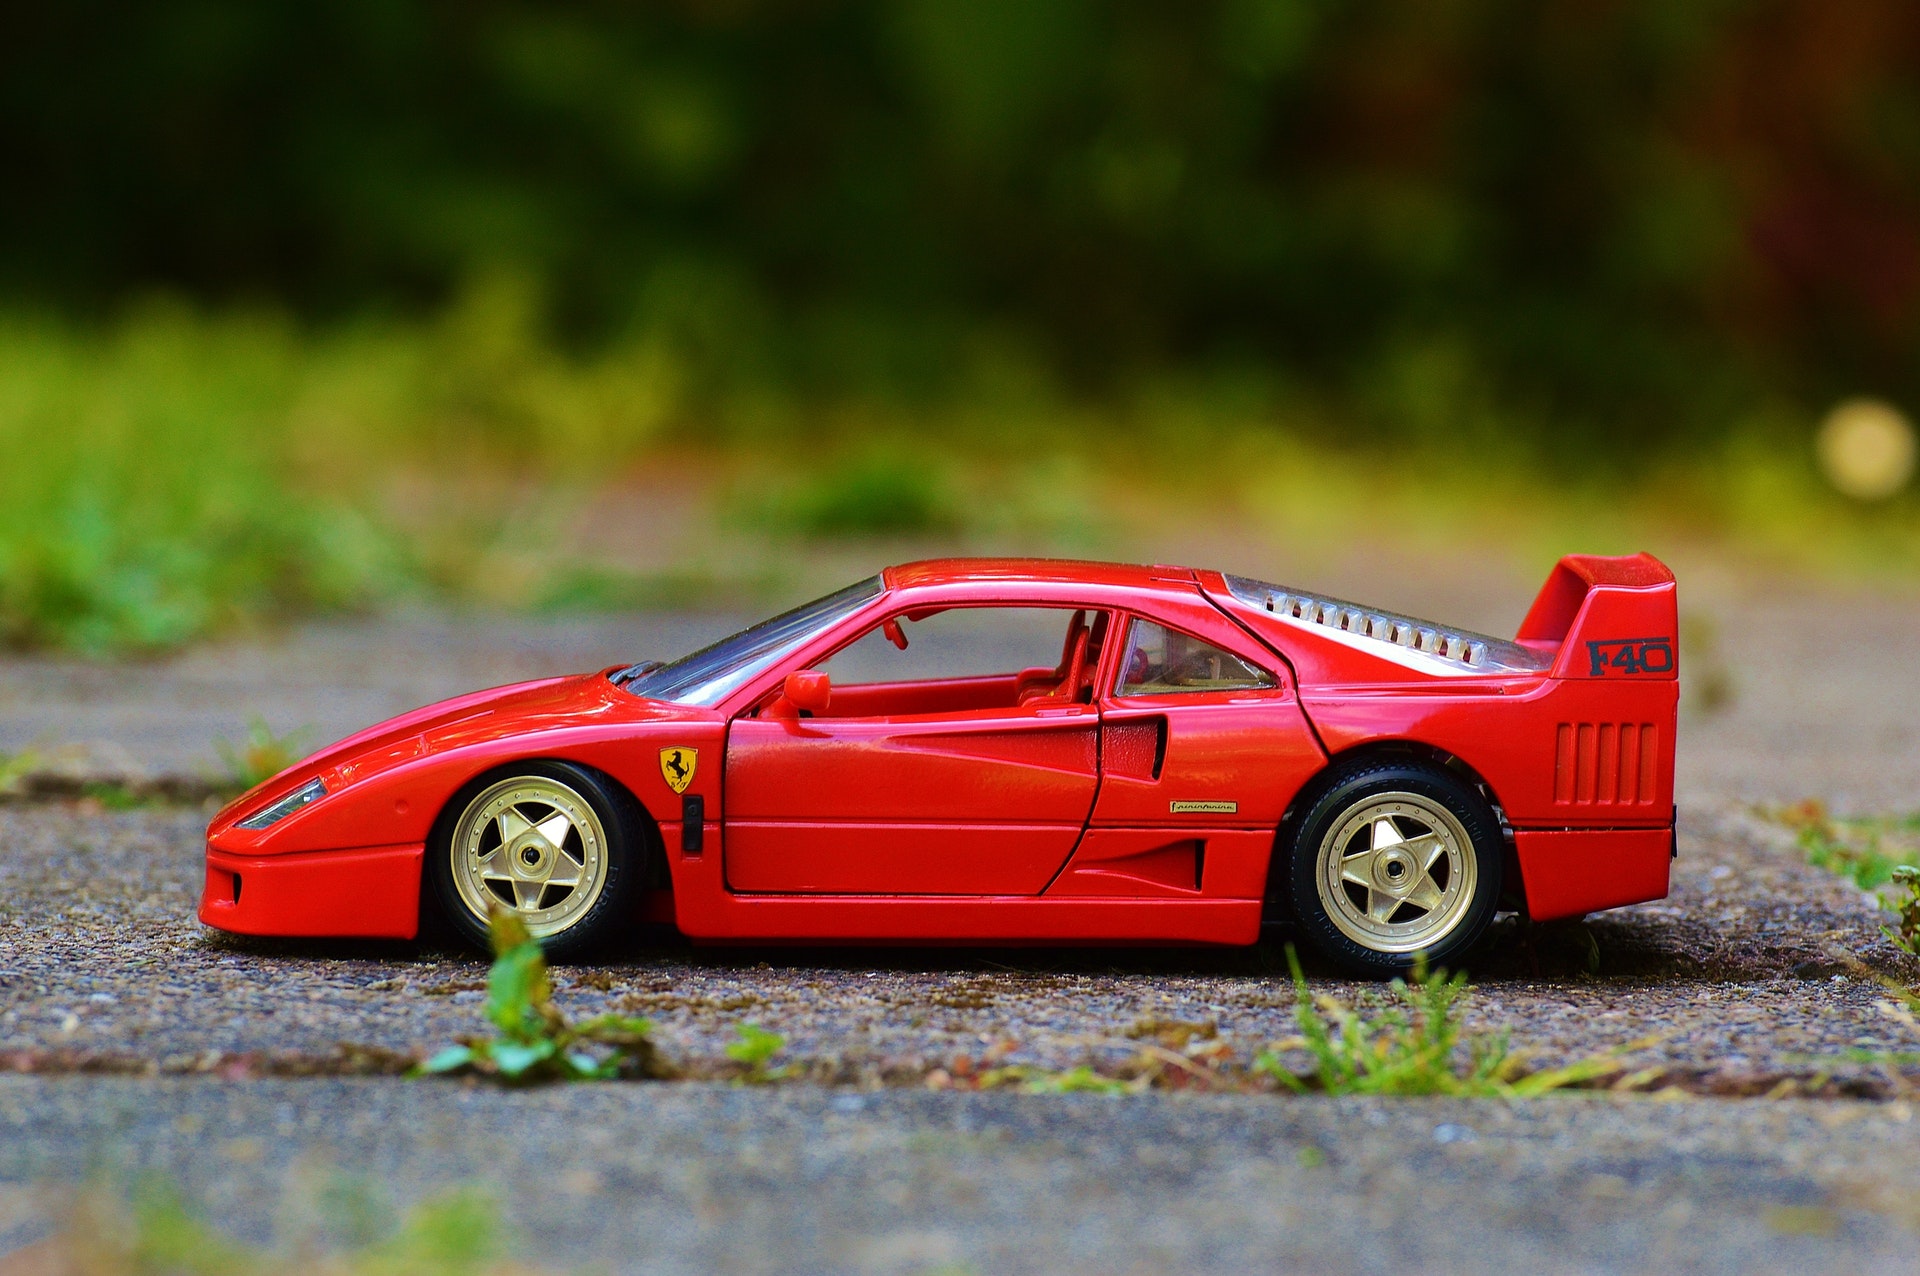 Hình nền xe Ferrari